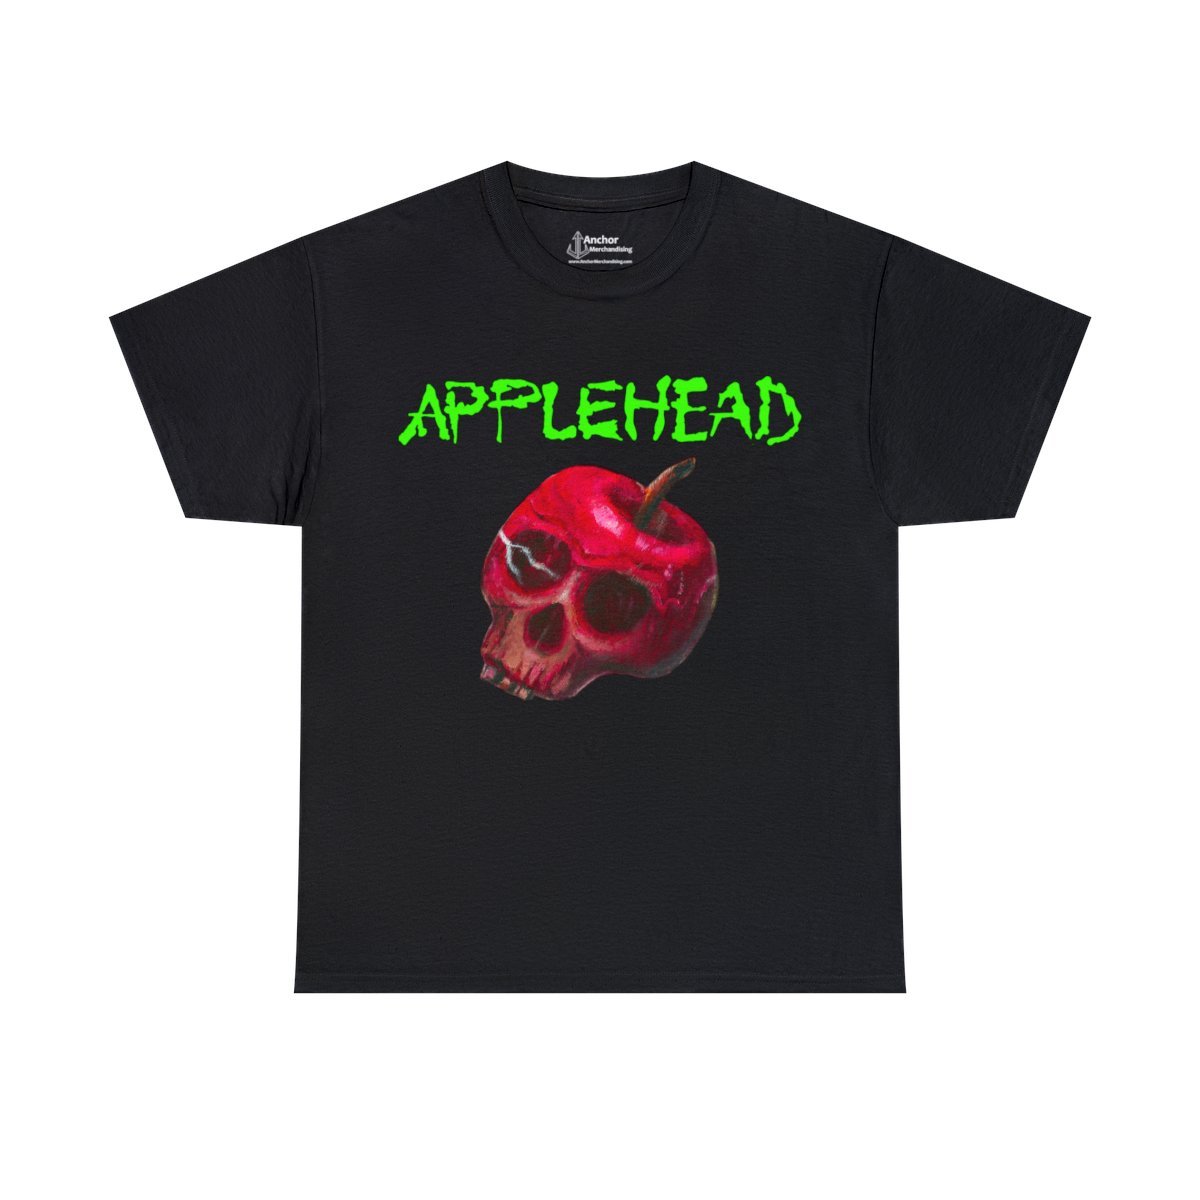 Applehead Red Apple Short Sleeve Tshirt